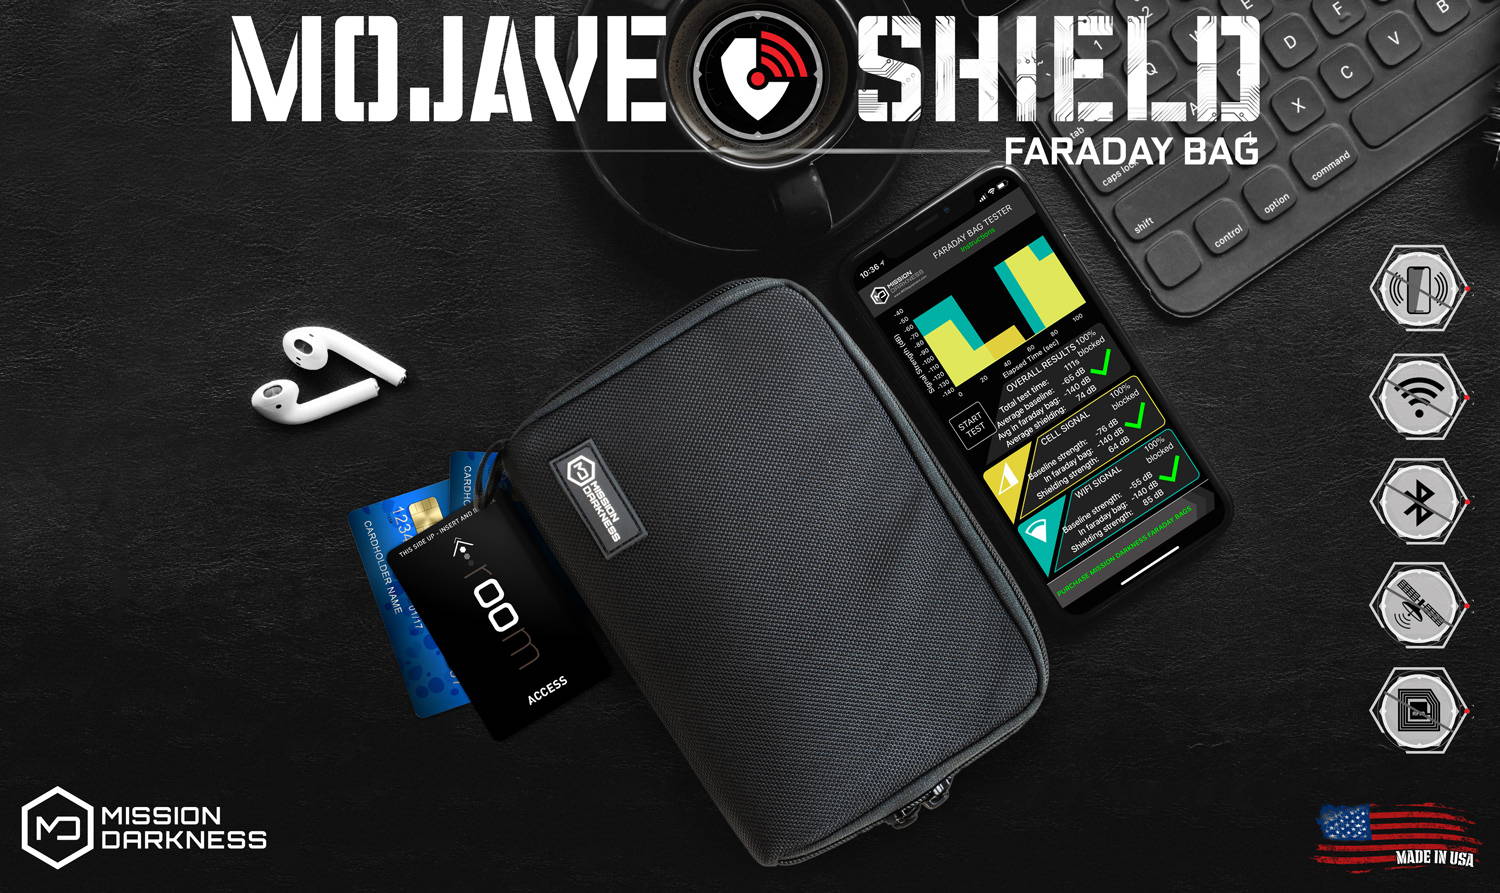 mission darkness mojve phone shield faraday bag rf signal blocking sleeve